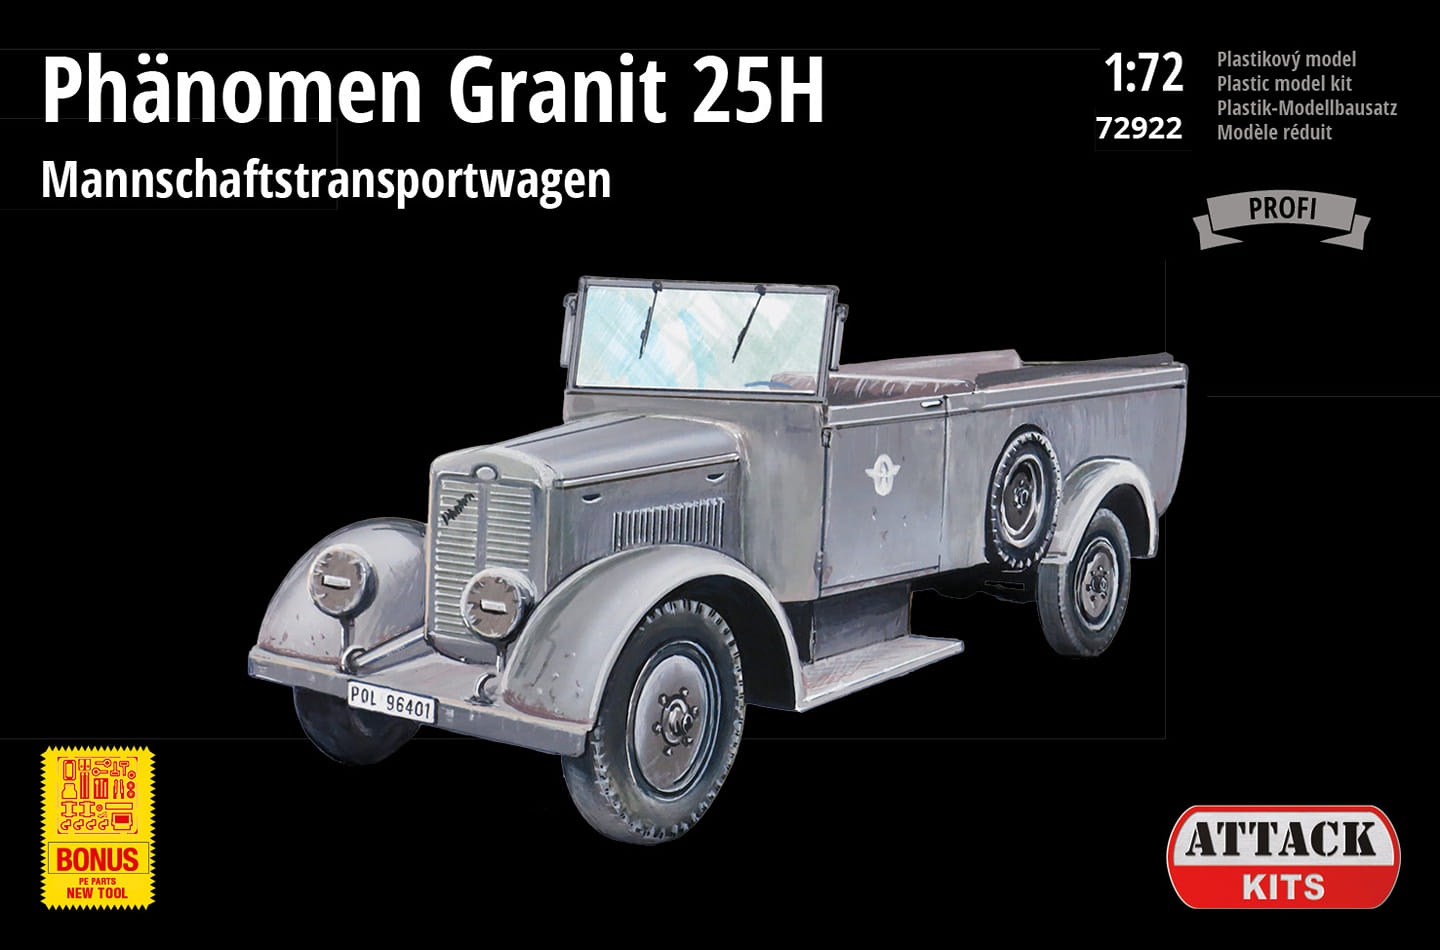 Phänomen Granit 25H Mannschaftstransportwagen